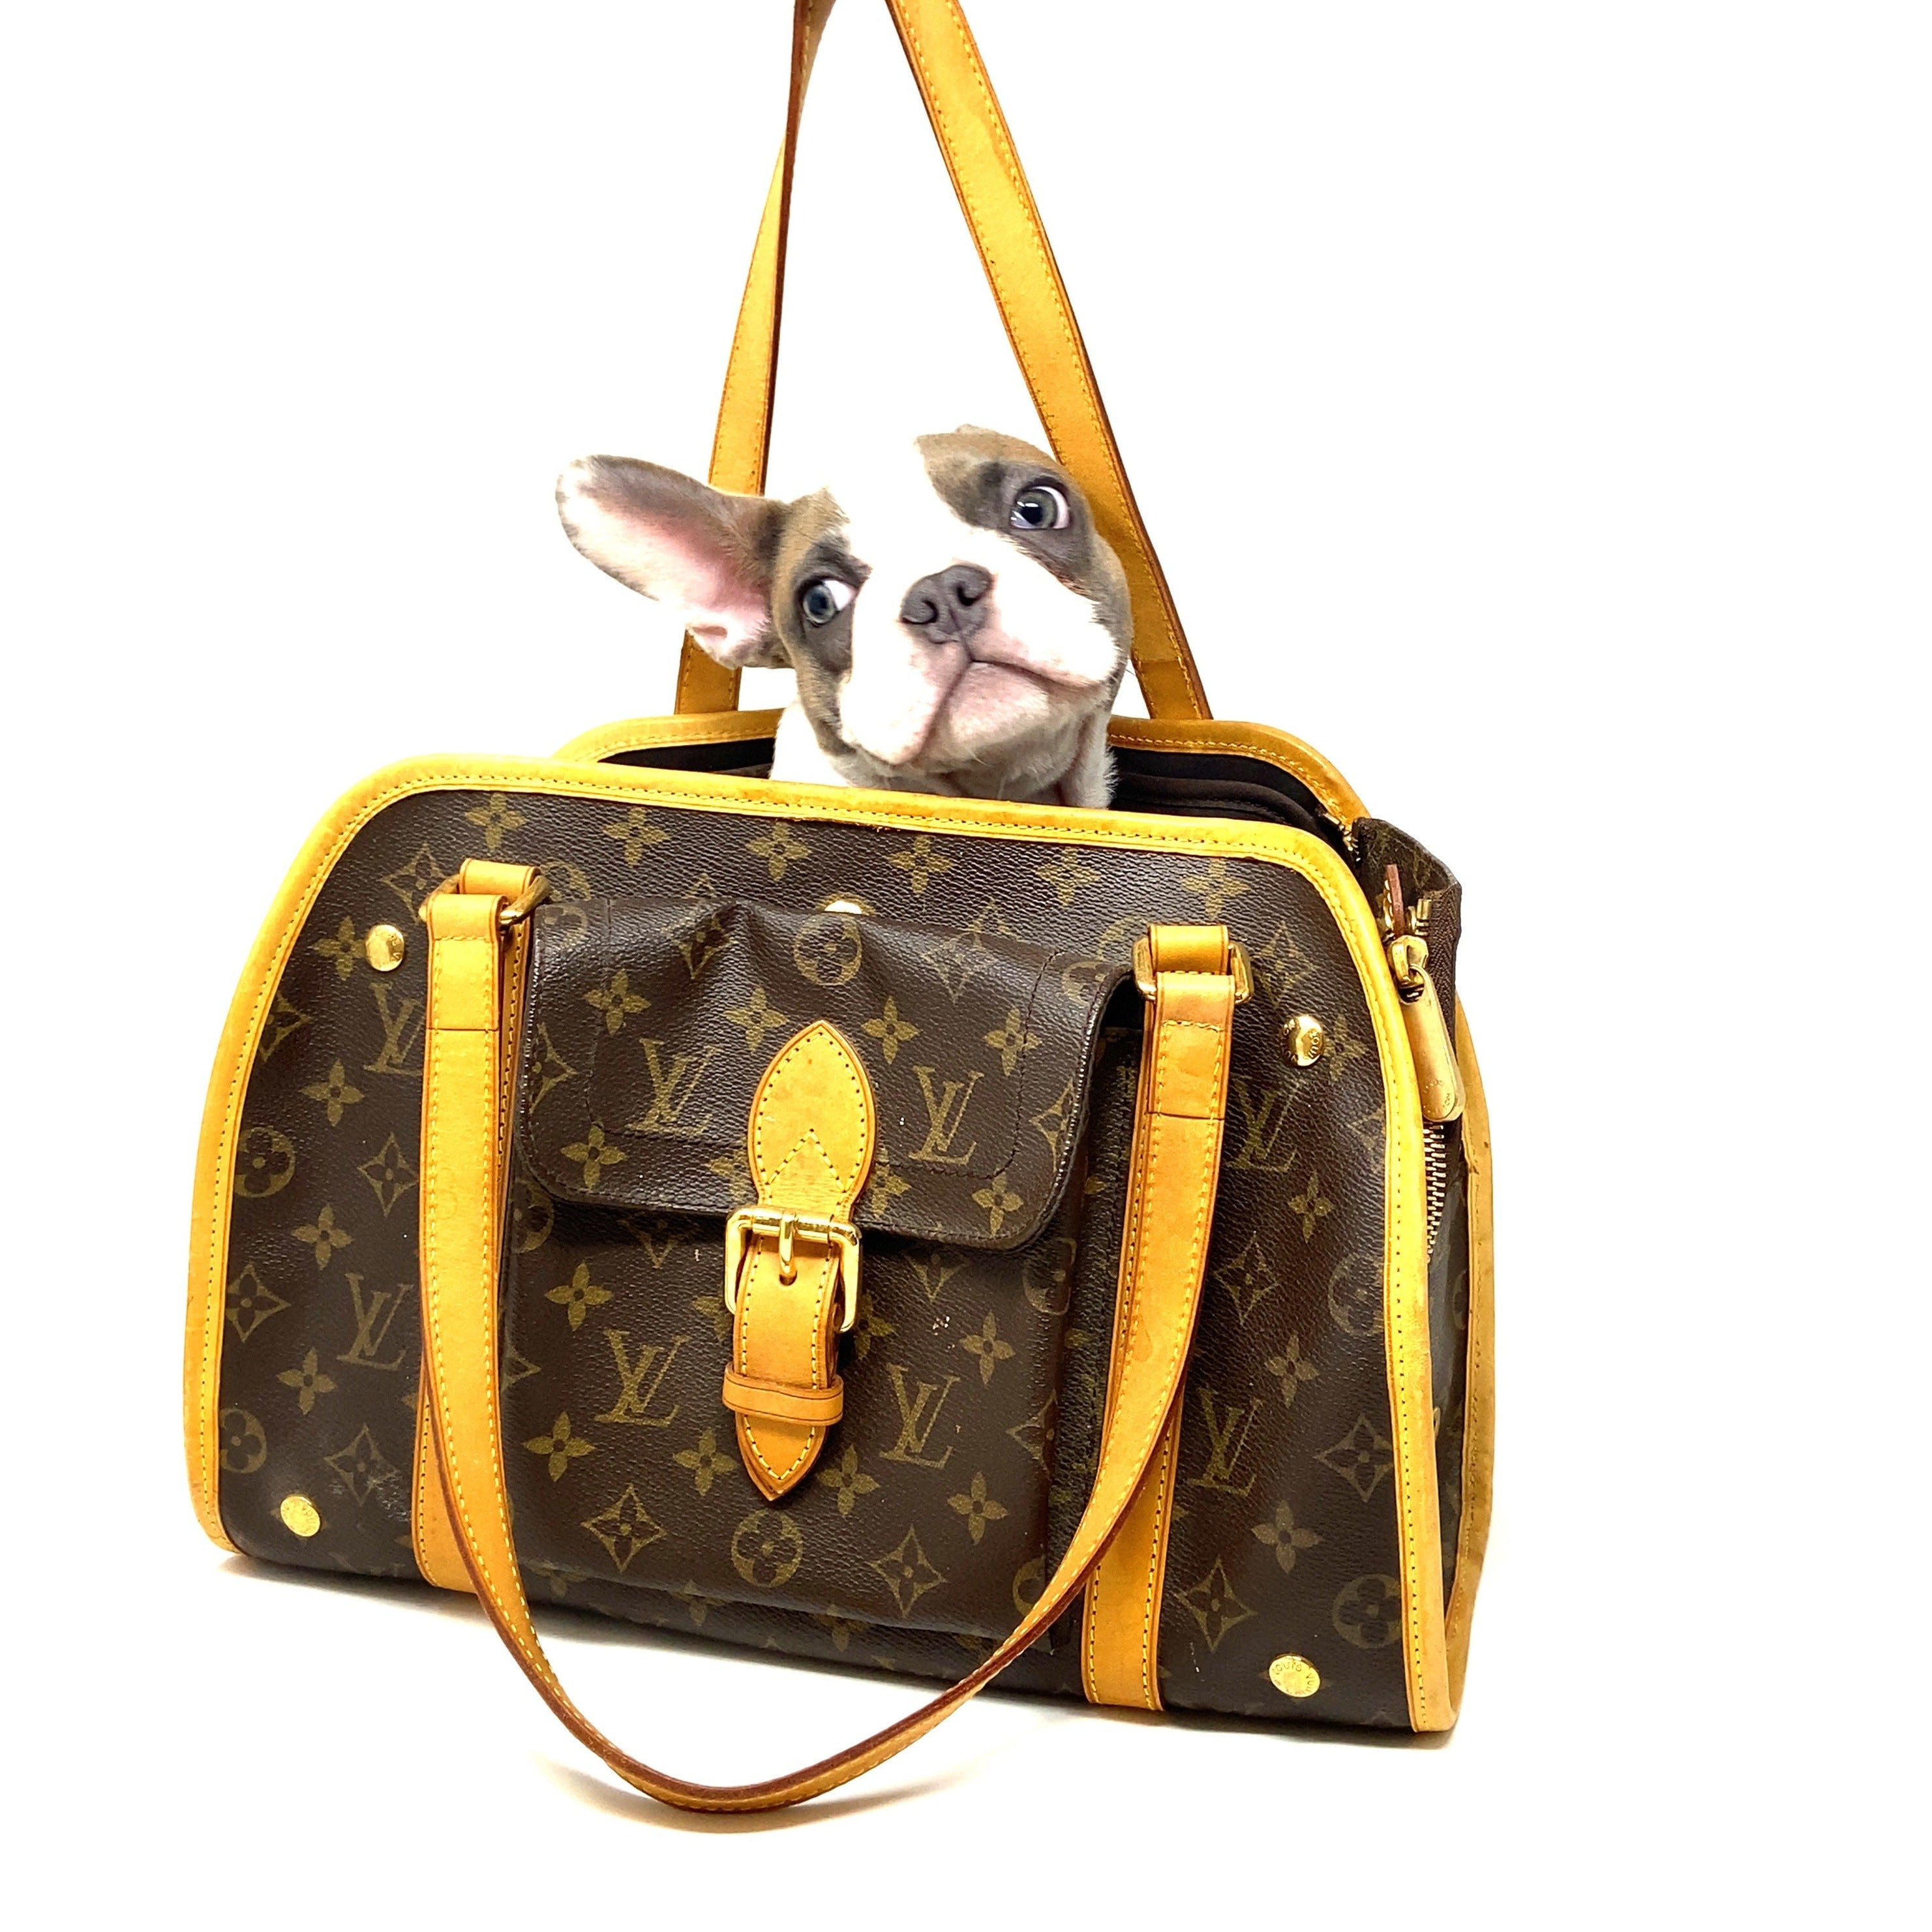 Louis Vuitton, Dog, Louis Vuitton Baxter Pm Pet Carrier